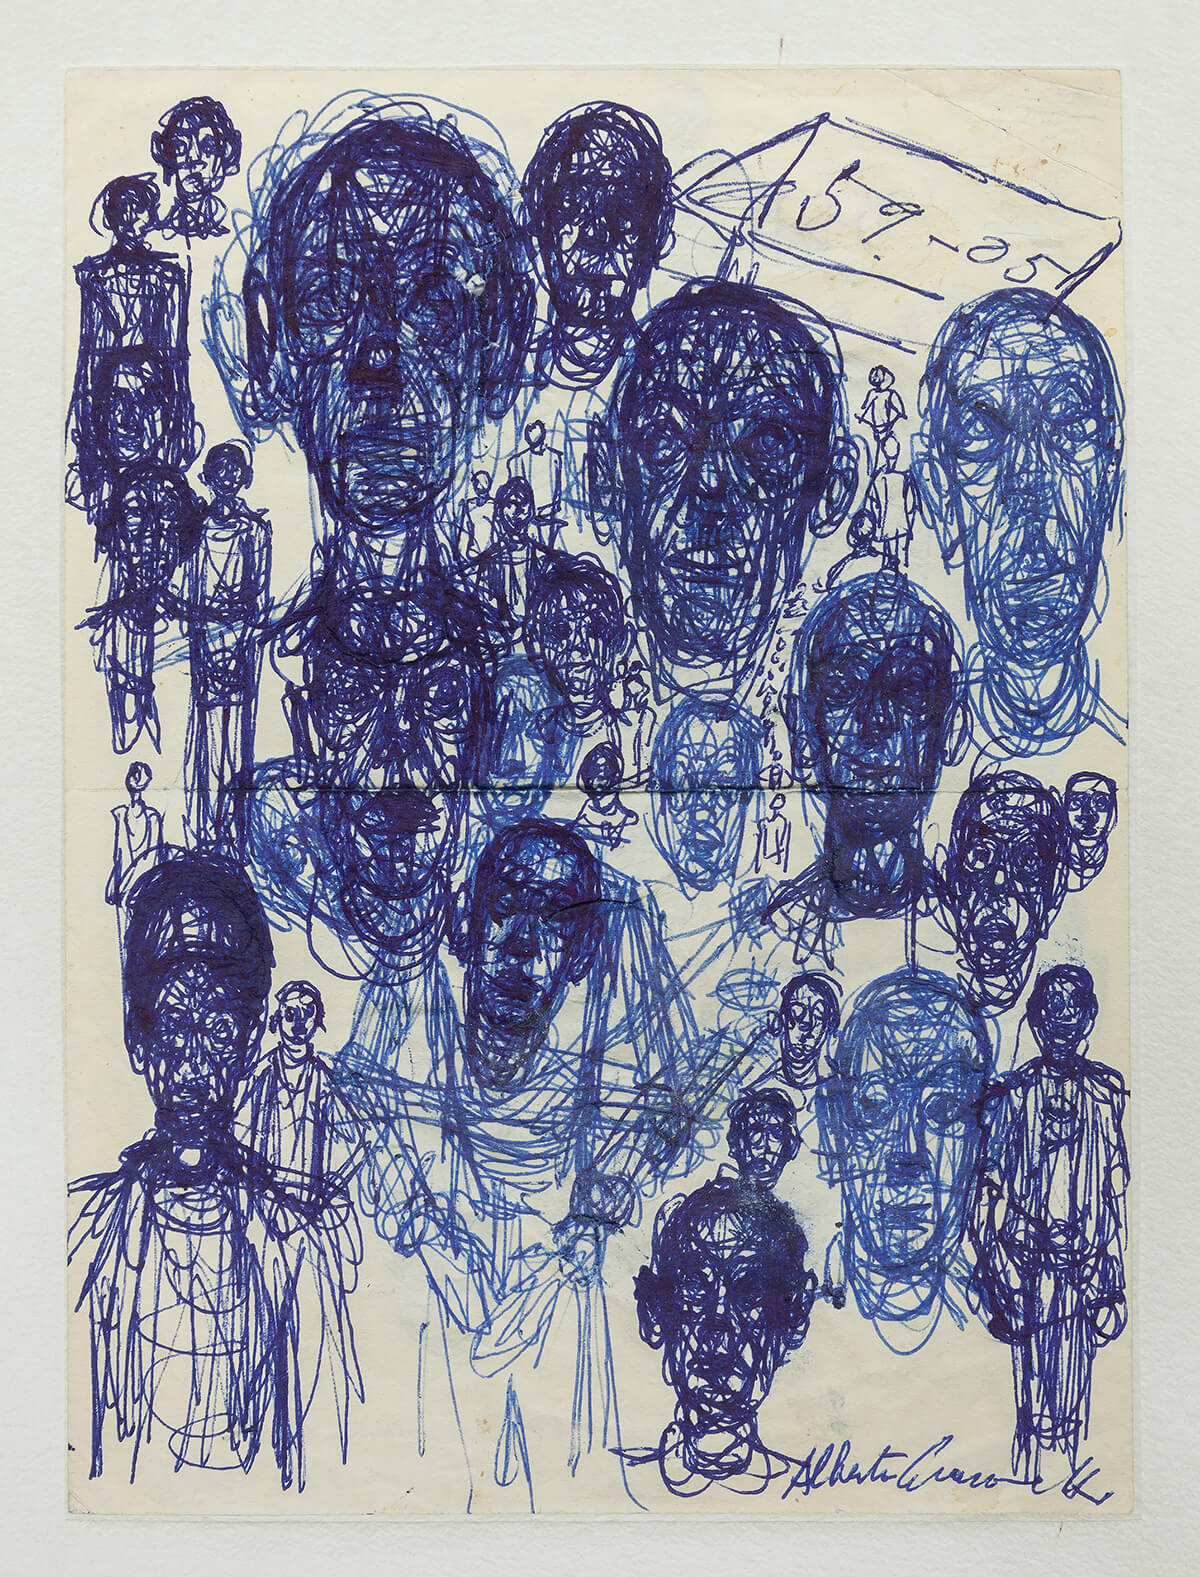 a biro sketch by renowned swiss artist Alberto Giacometti 